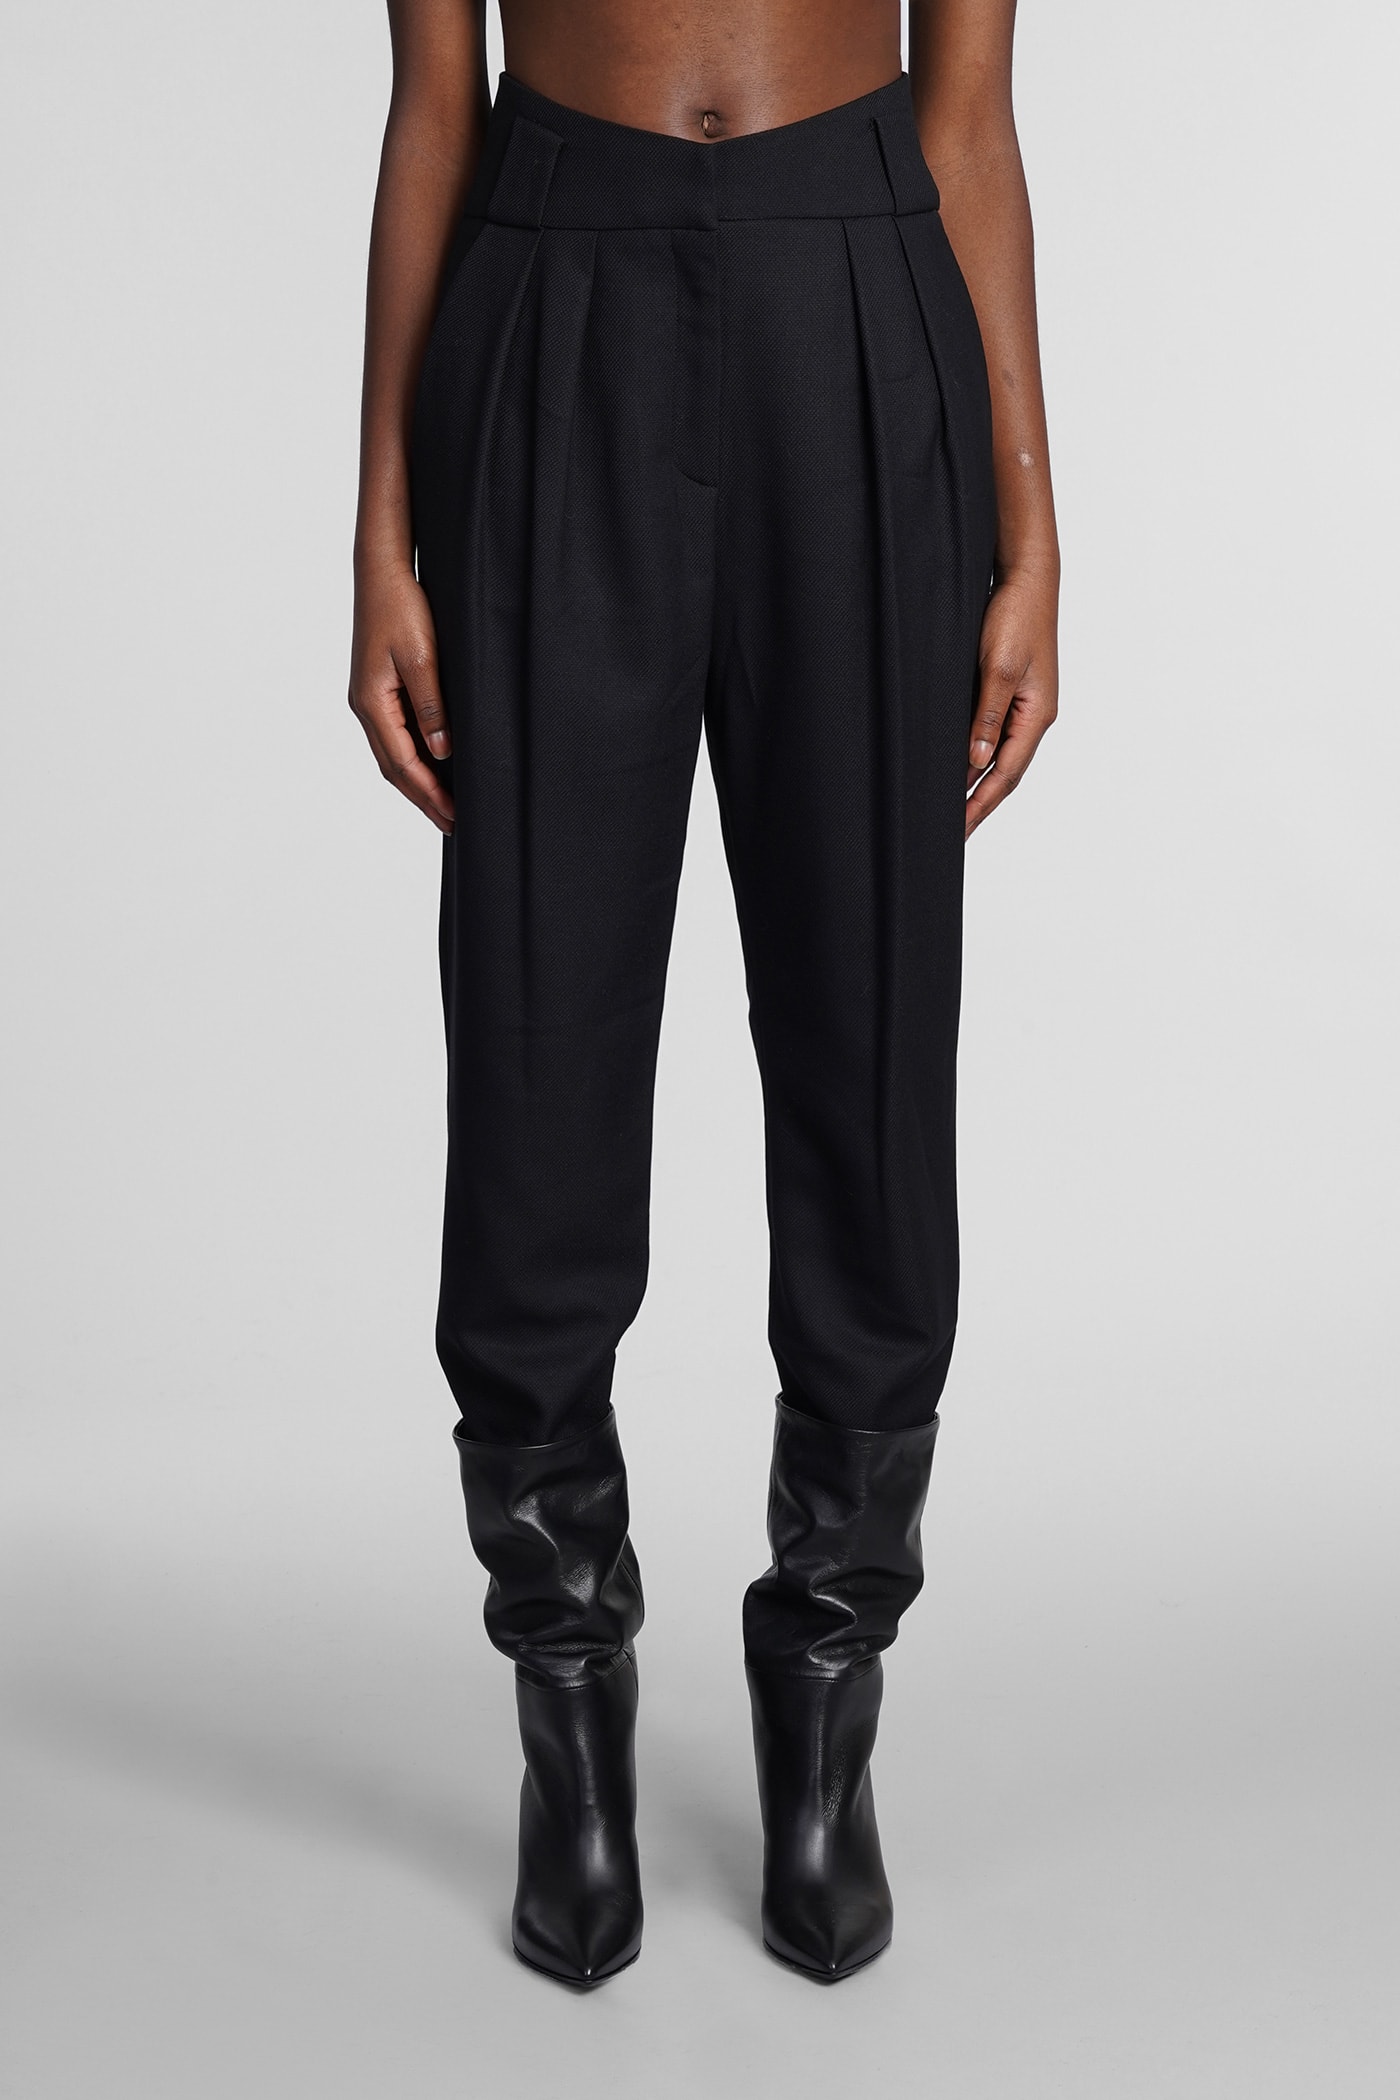 IRO Nahima Pants In Black Polyester